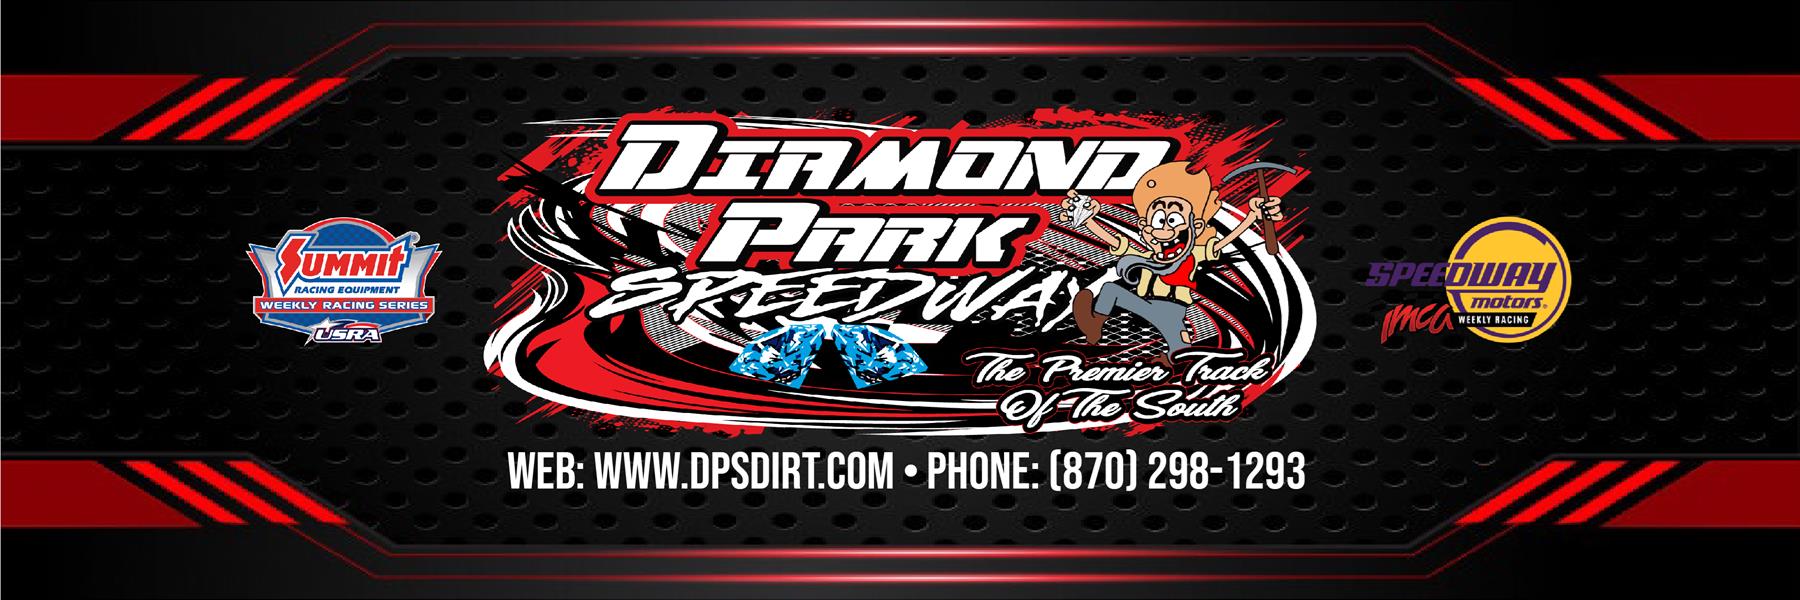 5/7/2022 - Diamond Park Speedway